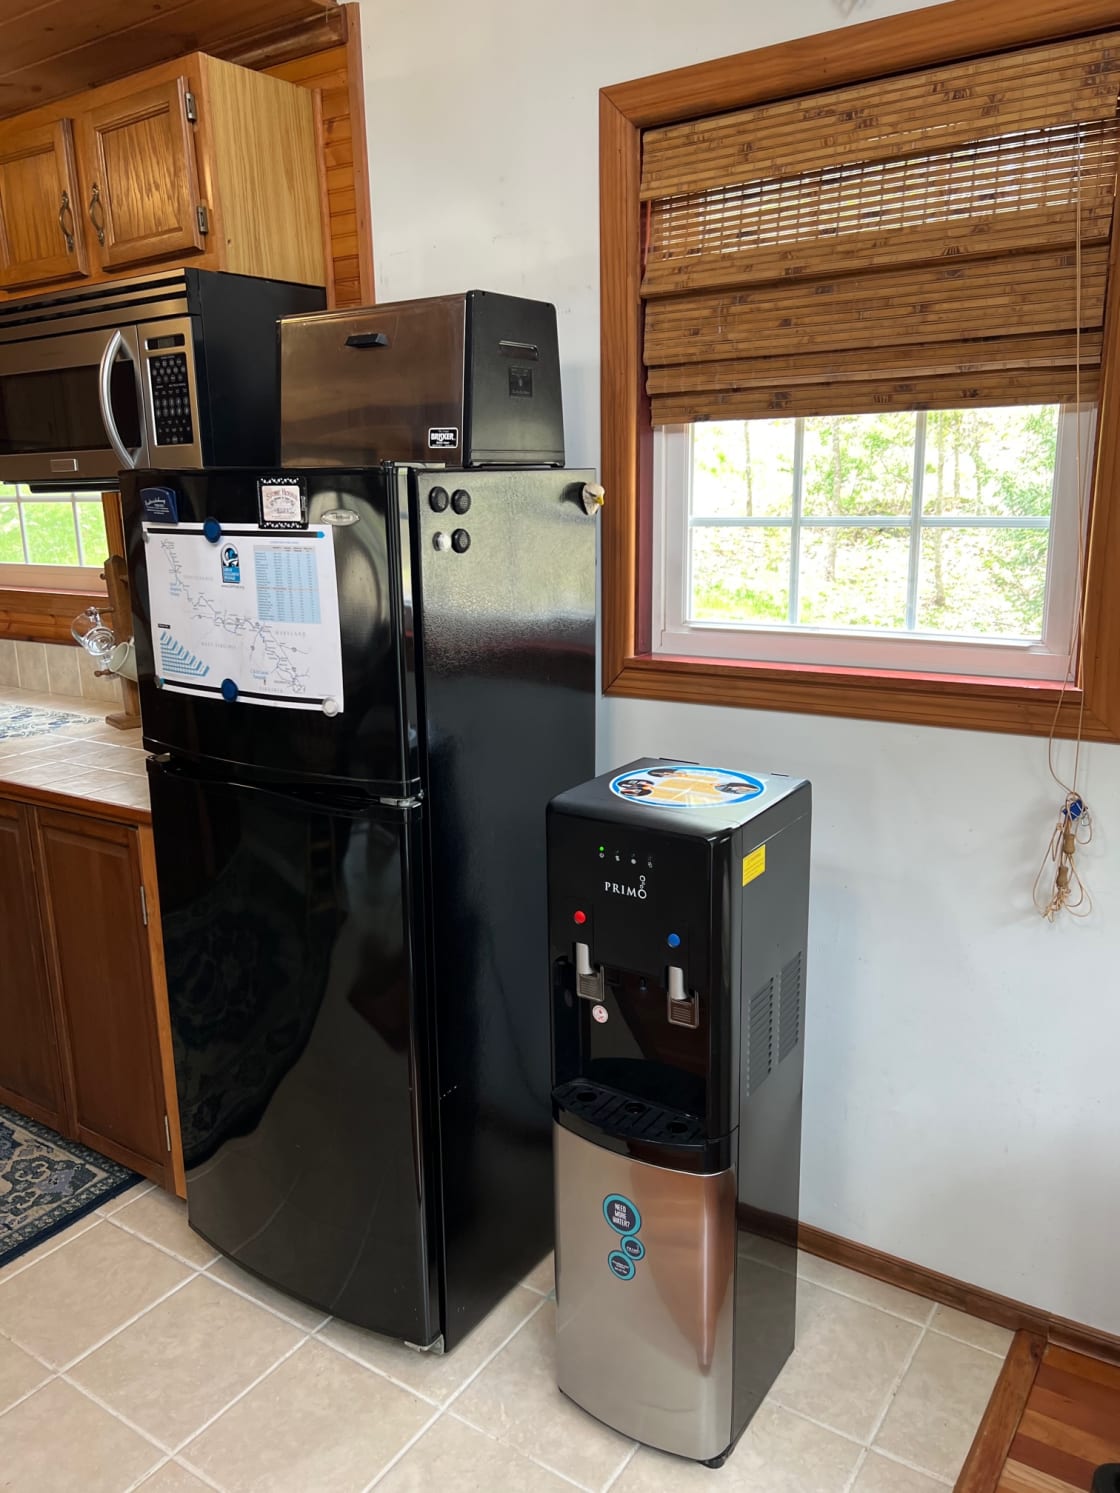 Far side of kitchen showing microwave, frig, and bottled water dispenser